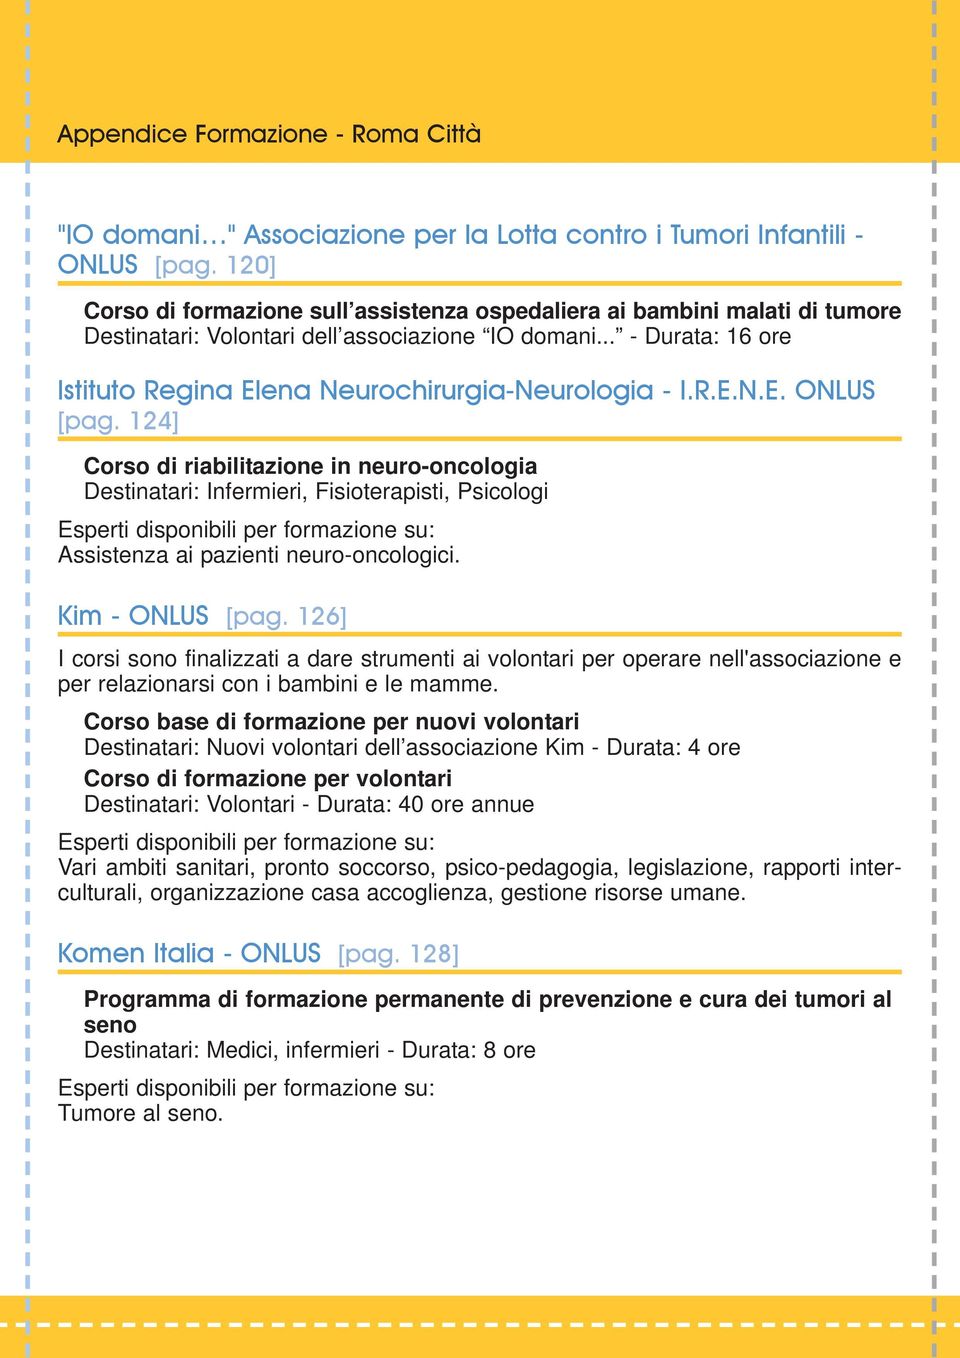 .. - Durata: 16 ore Istituto Regina Elena Neurochirurgia-Neurologia - I.R.E.N.E. ONLUS [pag.